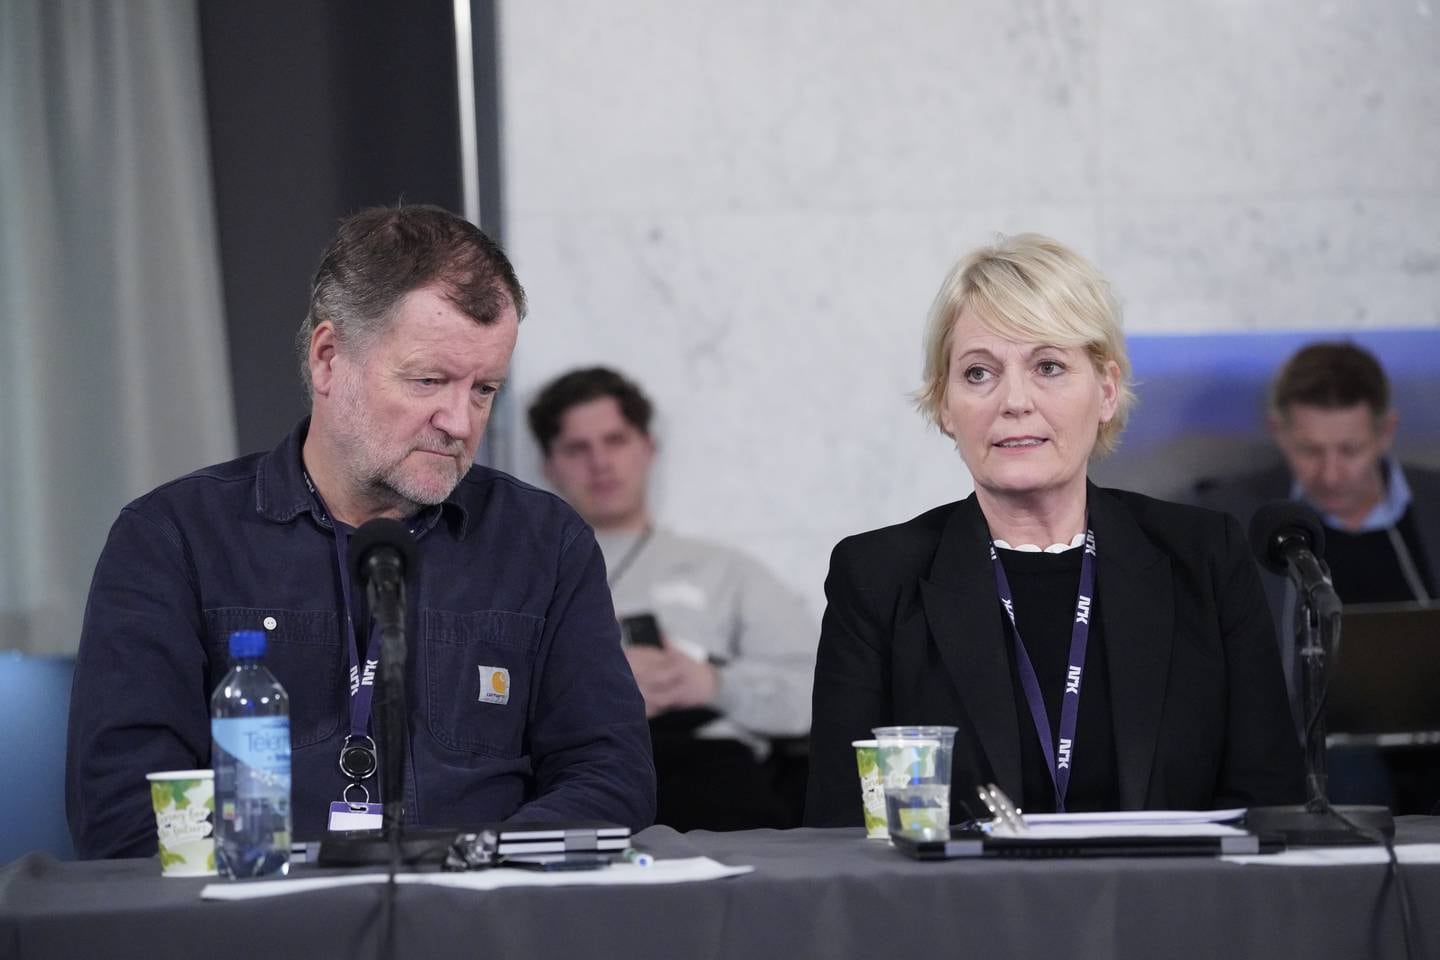 Kringkastingssjef Vibeke Fürst Haugen og sjef for NRK Underholdningsavdelingen Charlo Jørgen Halvorsen var på plass under kringkastingsrådets møte om Sophie Elise-kontroversen.